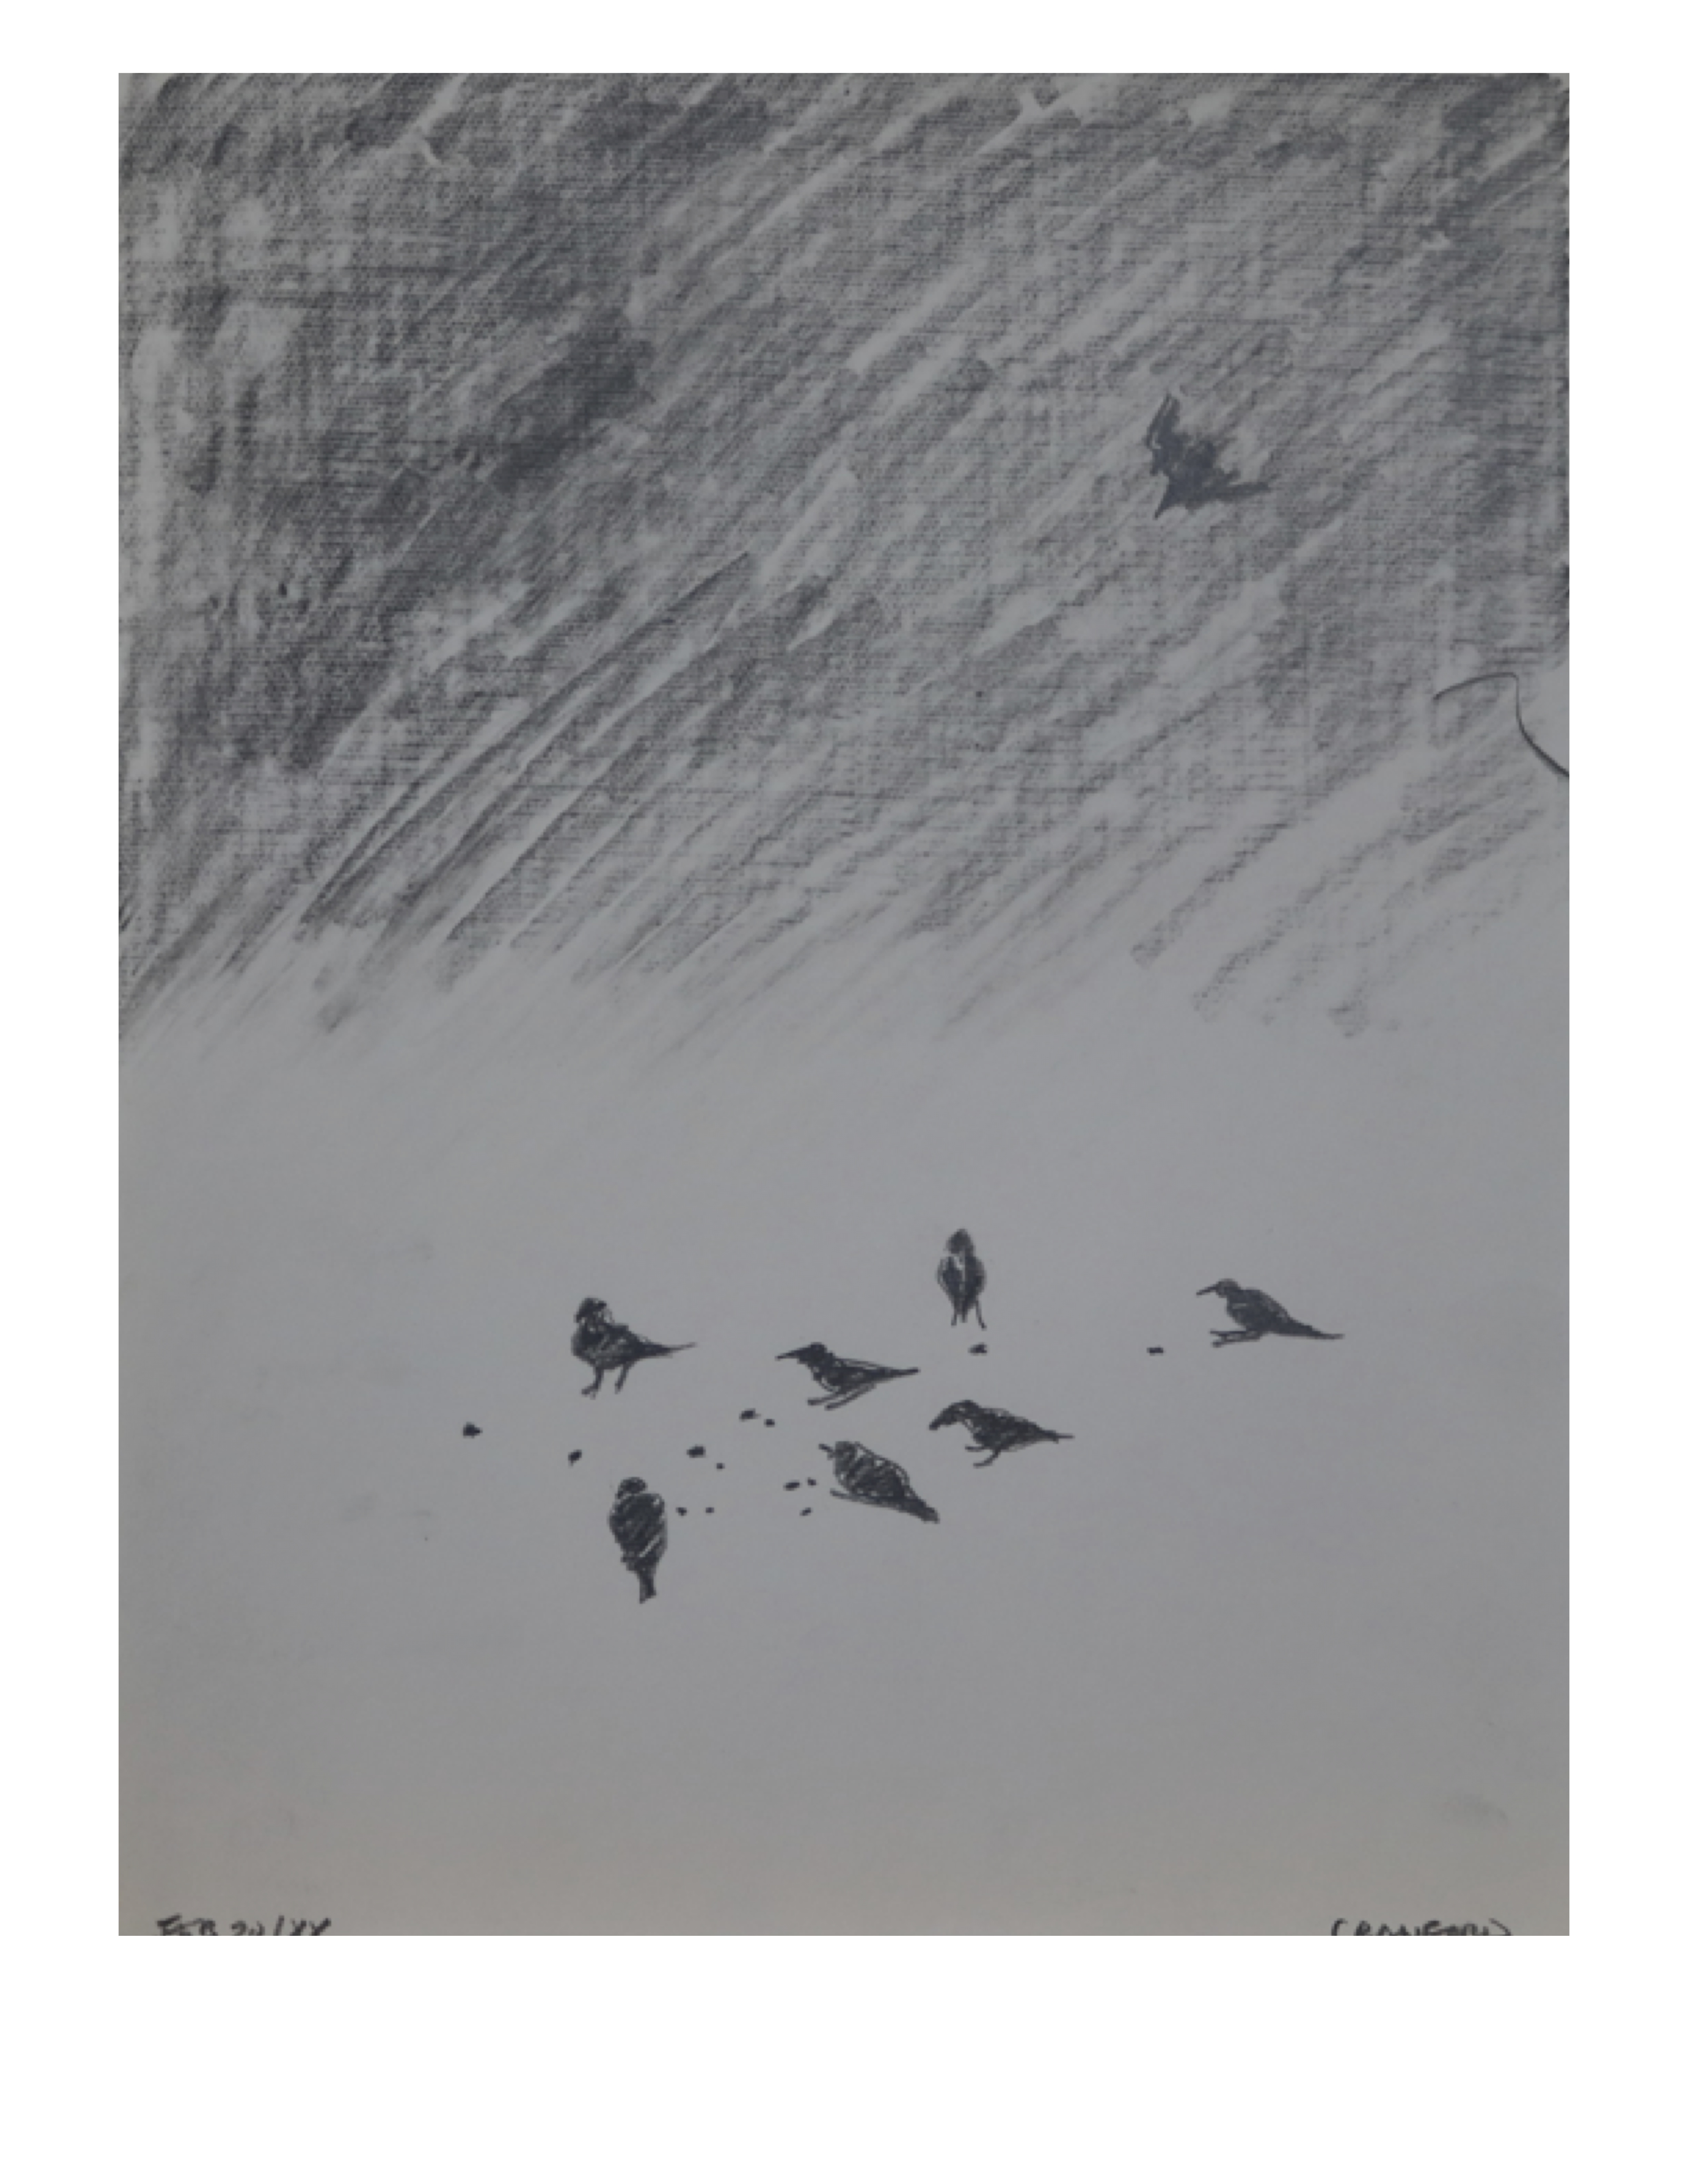 Birds, Feb 20, 1988, pencil on paper, 21.6 cm x 28 cm